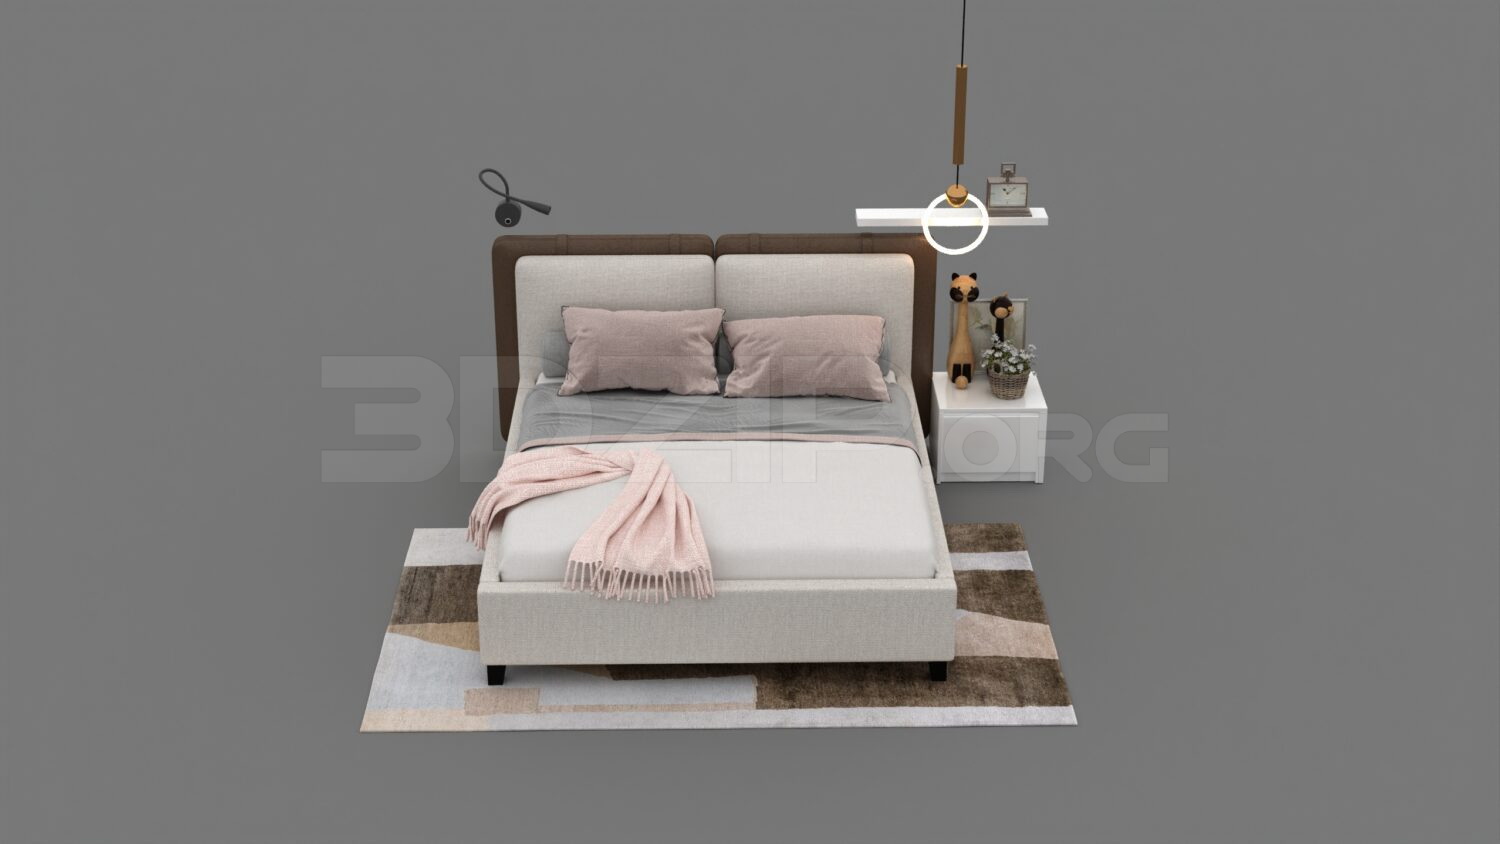 1693. Download Free Bed Model By Gem Tran